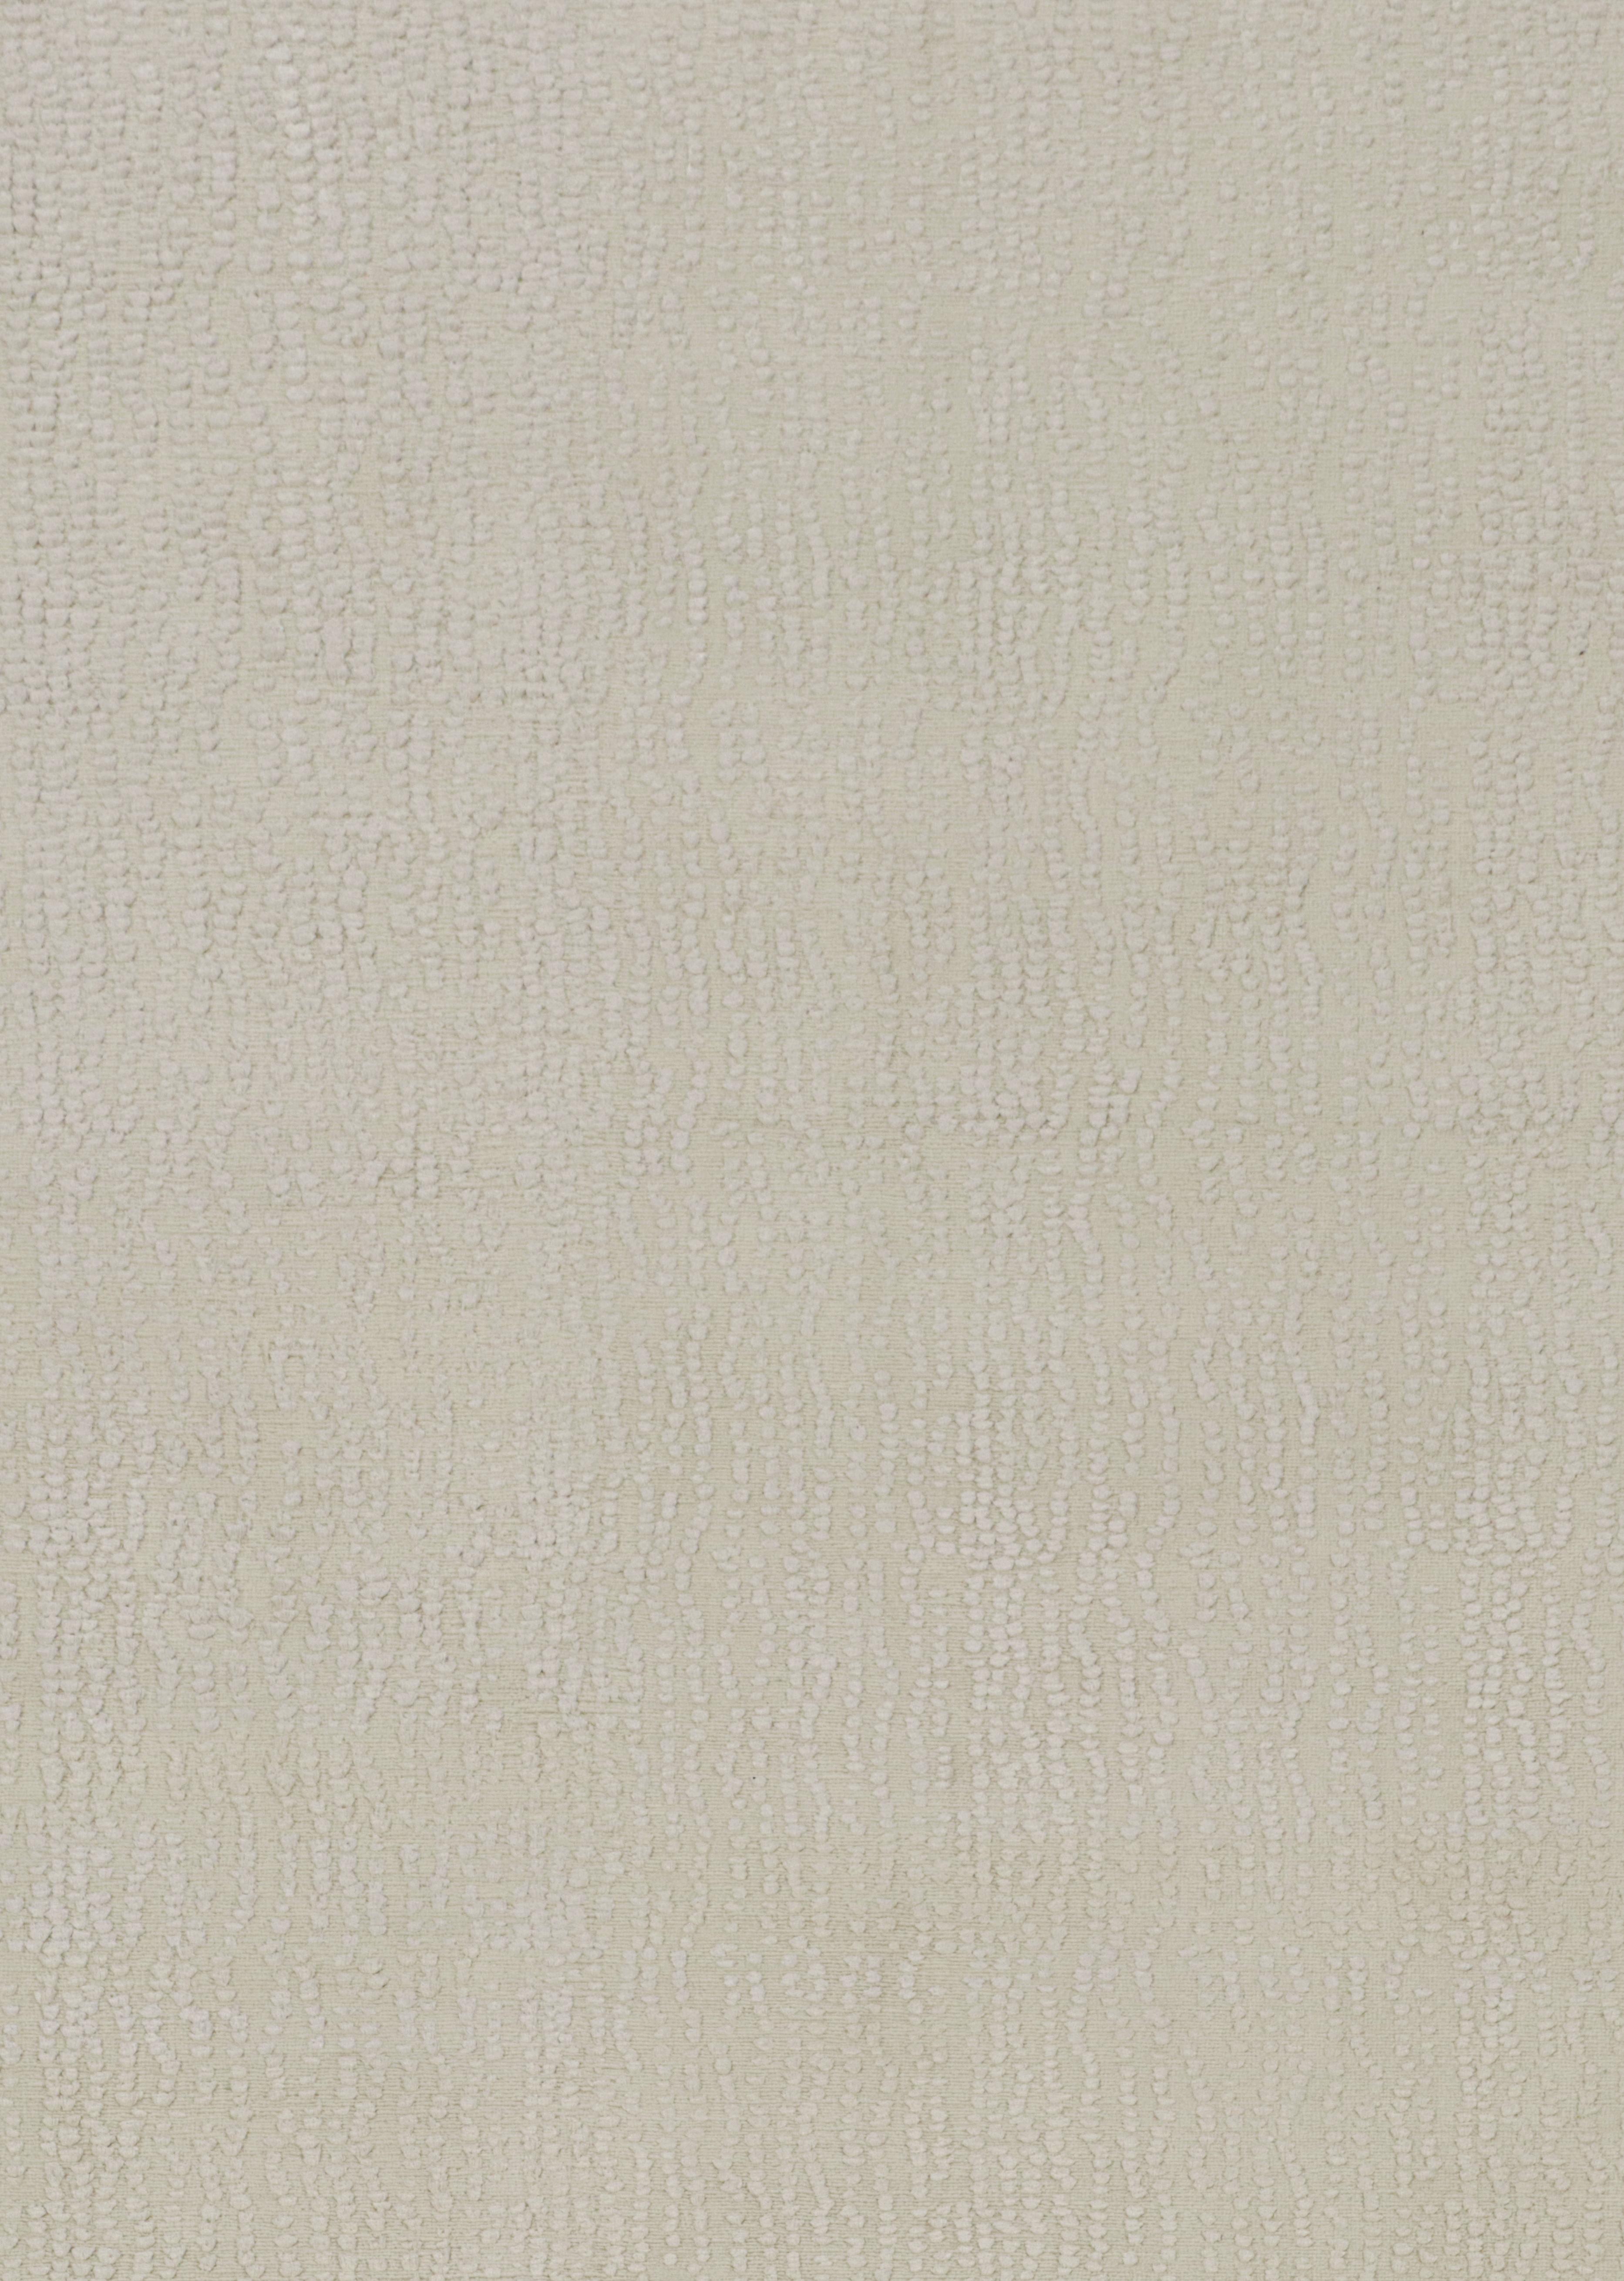 Rug & Kilim's Modern High-and-Low Textural Rug Design in Off-White (Moderne) im Angebot